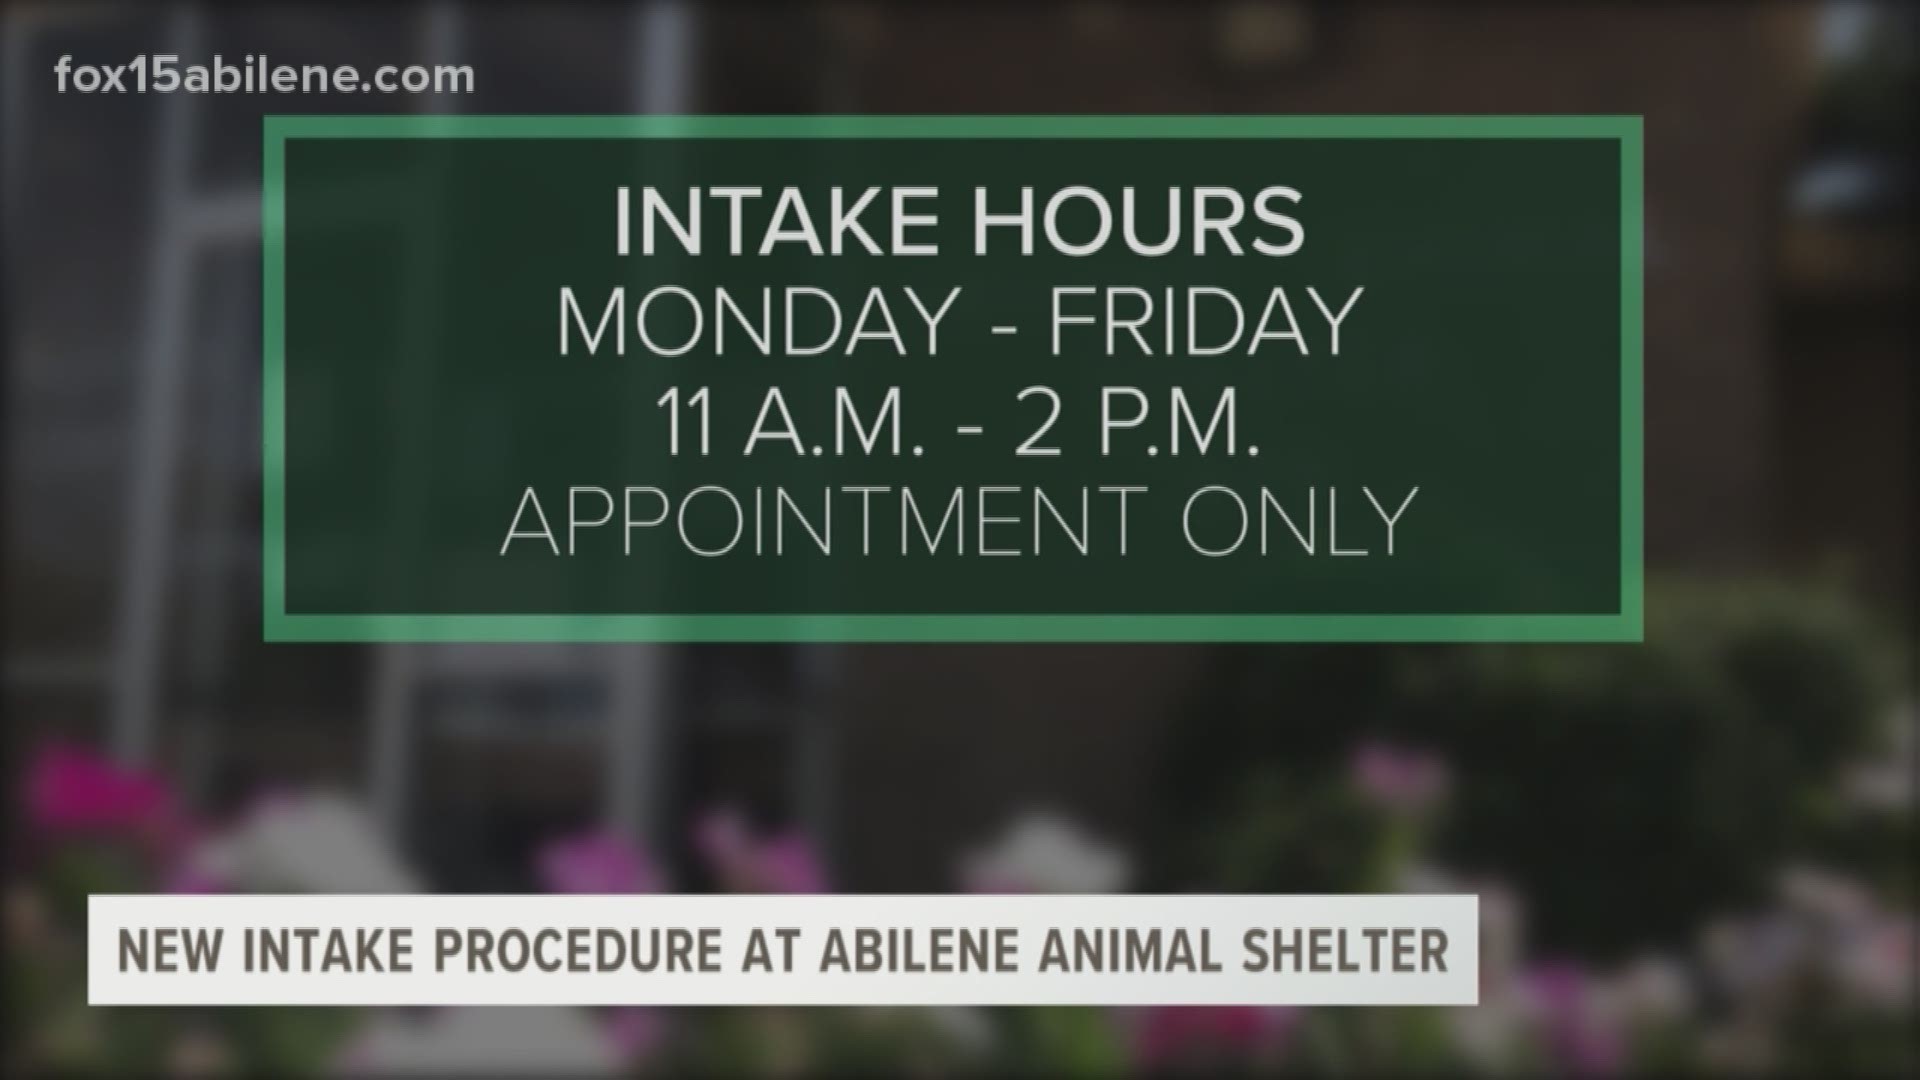 New intake procedure at Abilene Animal Shelter